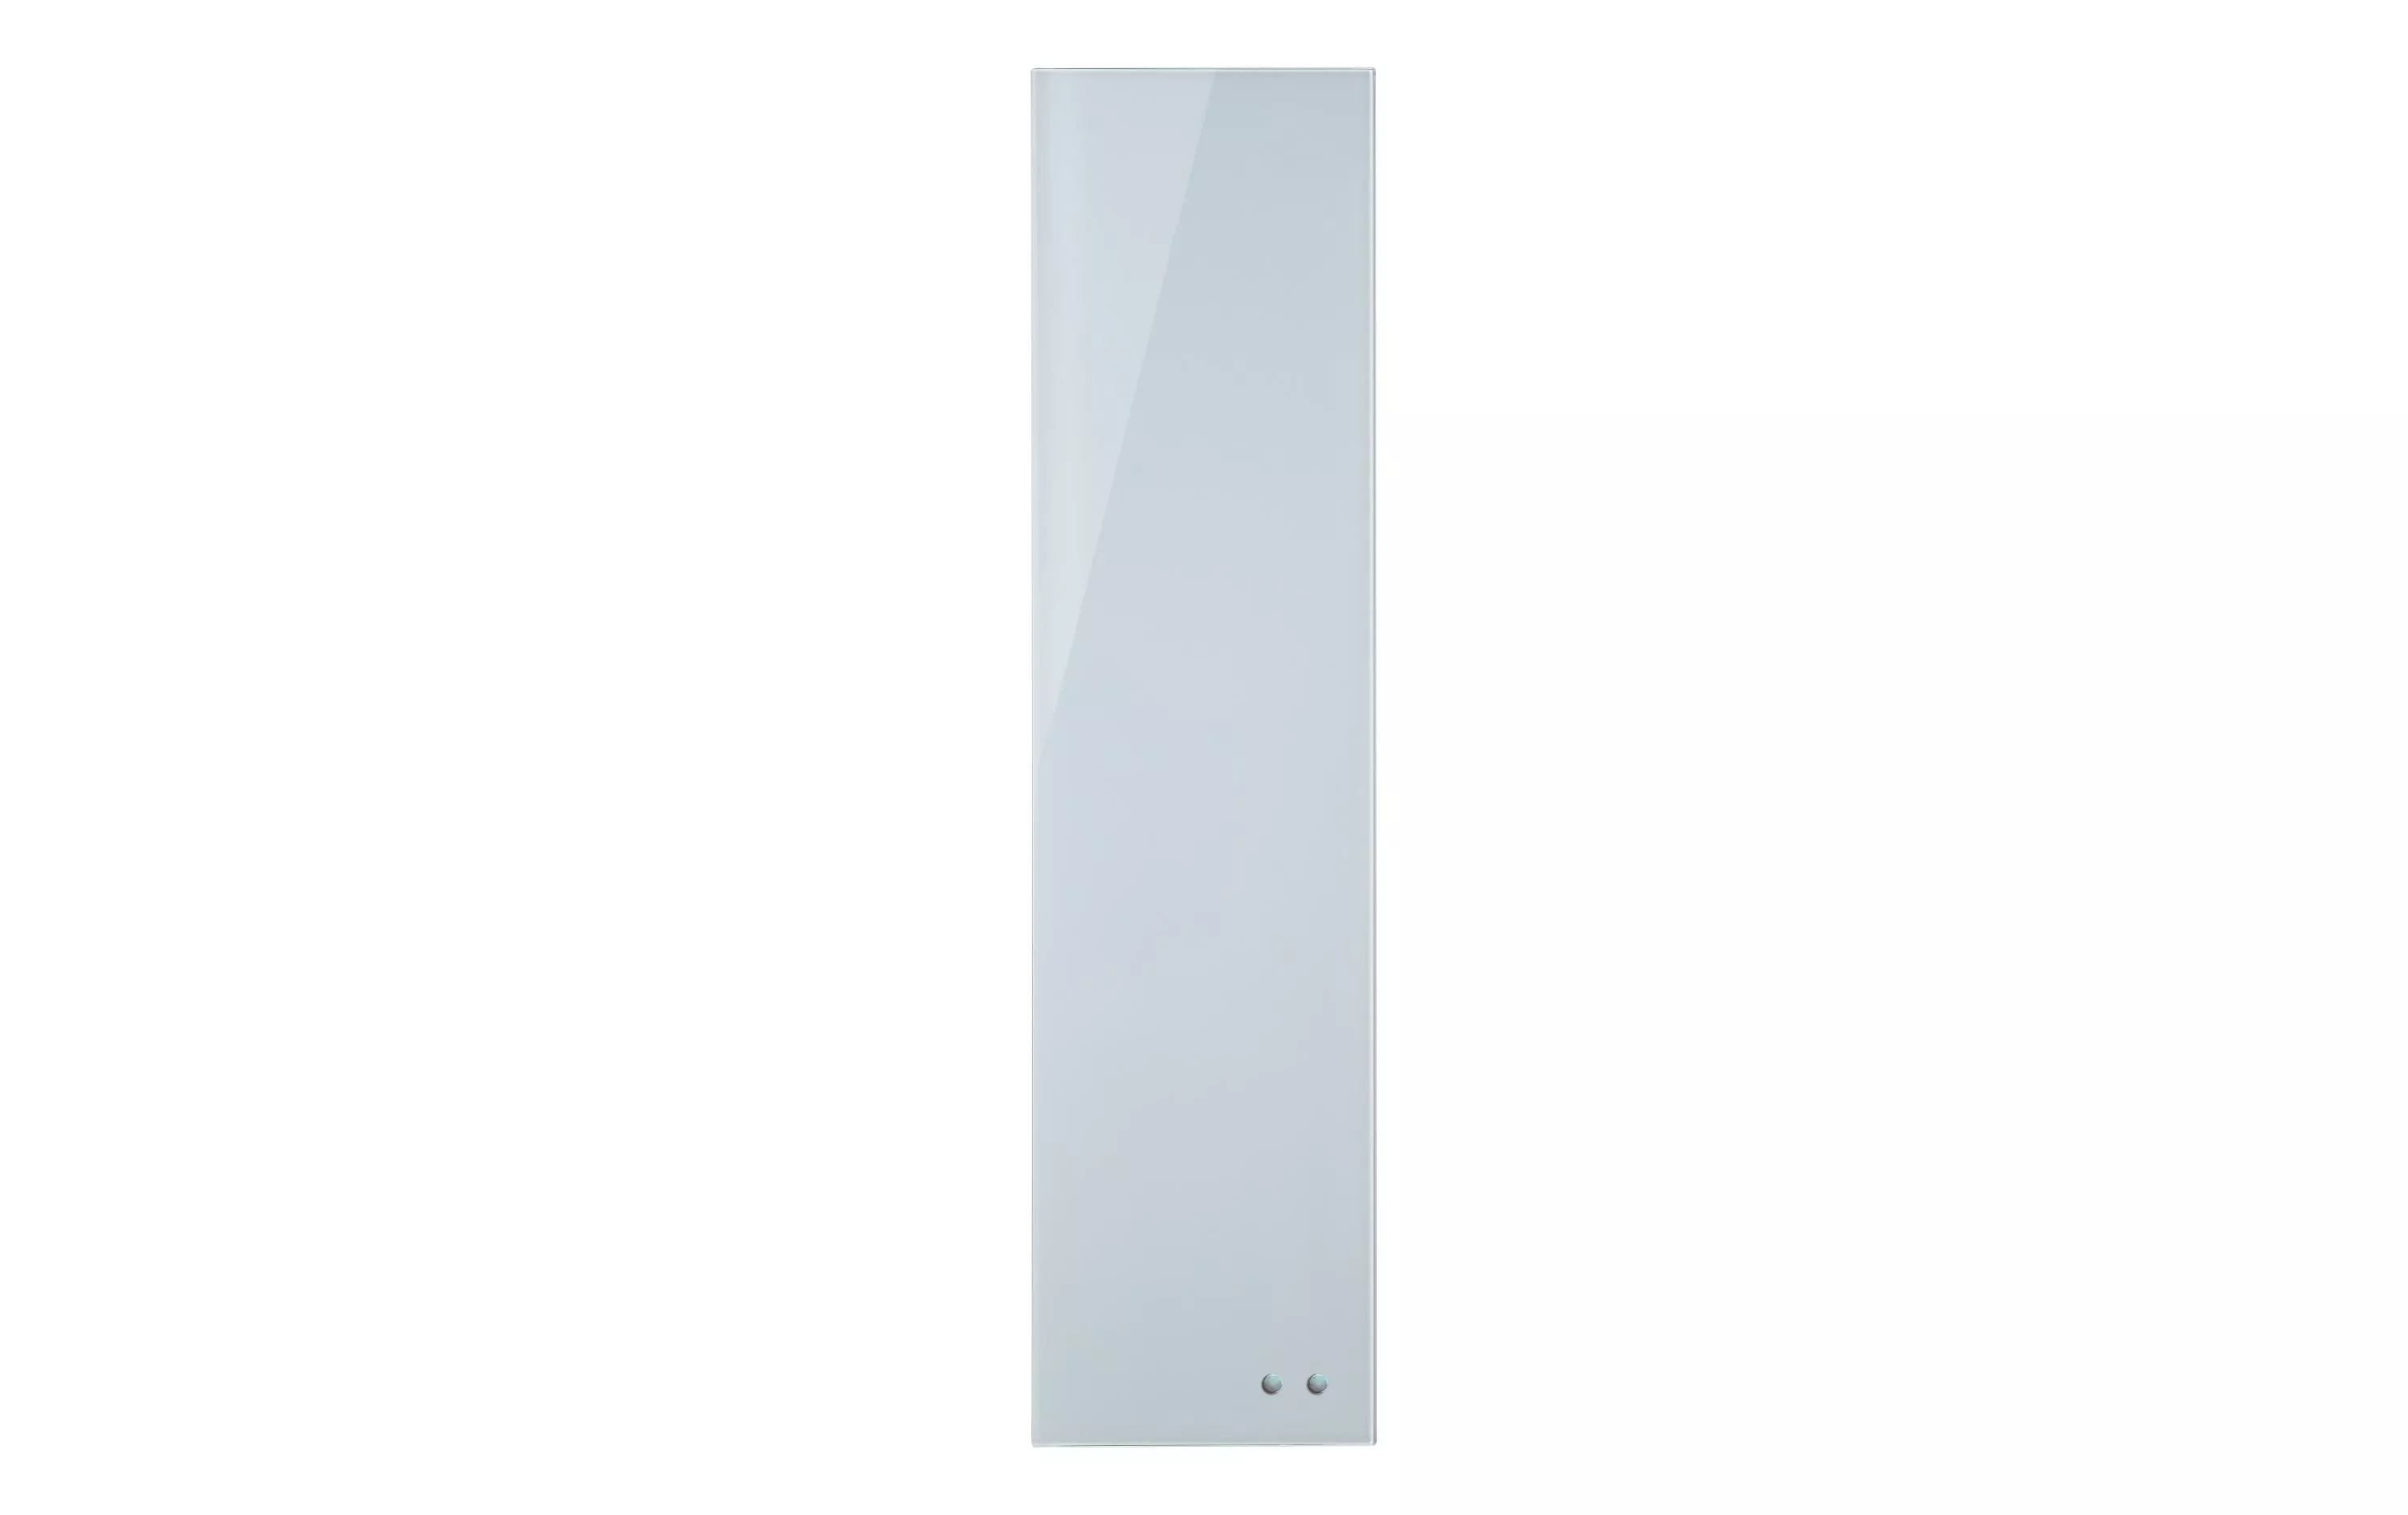 Magnethaftendes Glassboard 80 cm x 20 cm, Weiss